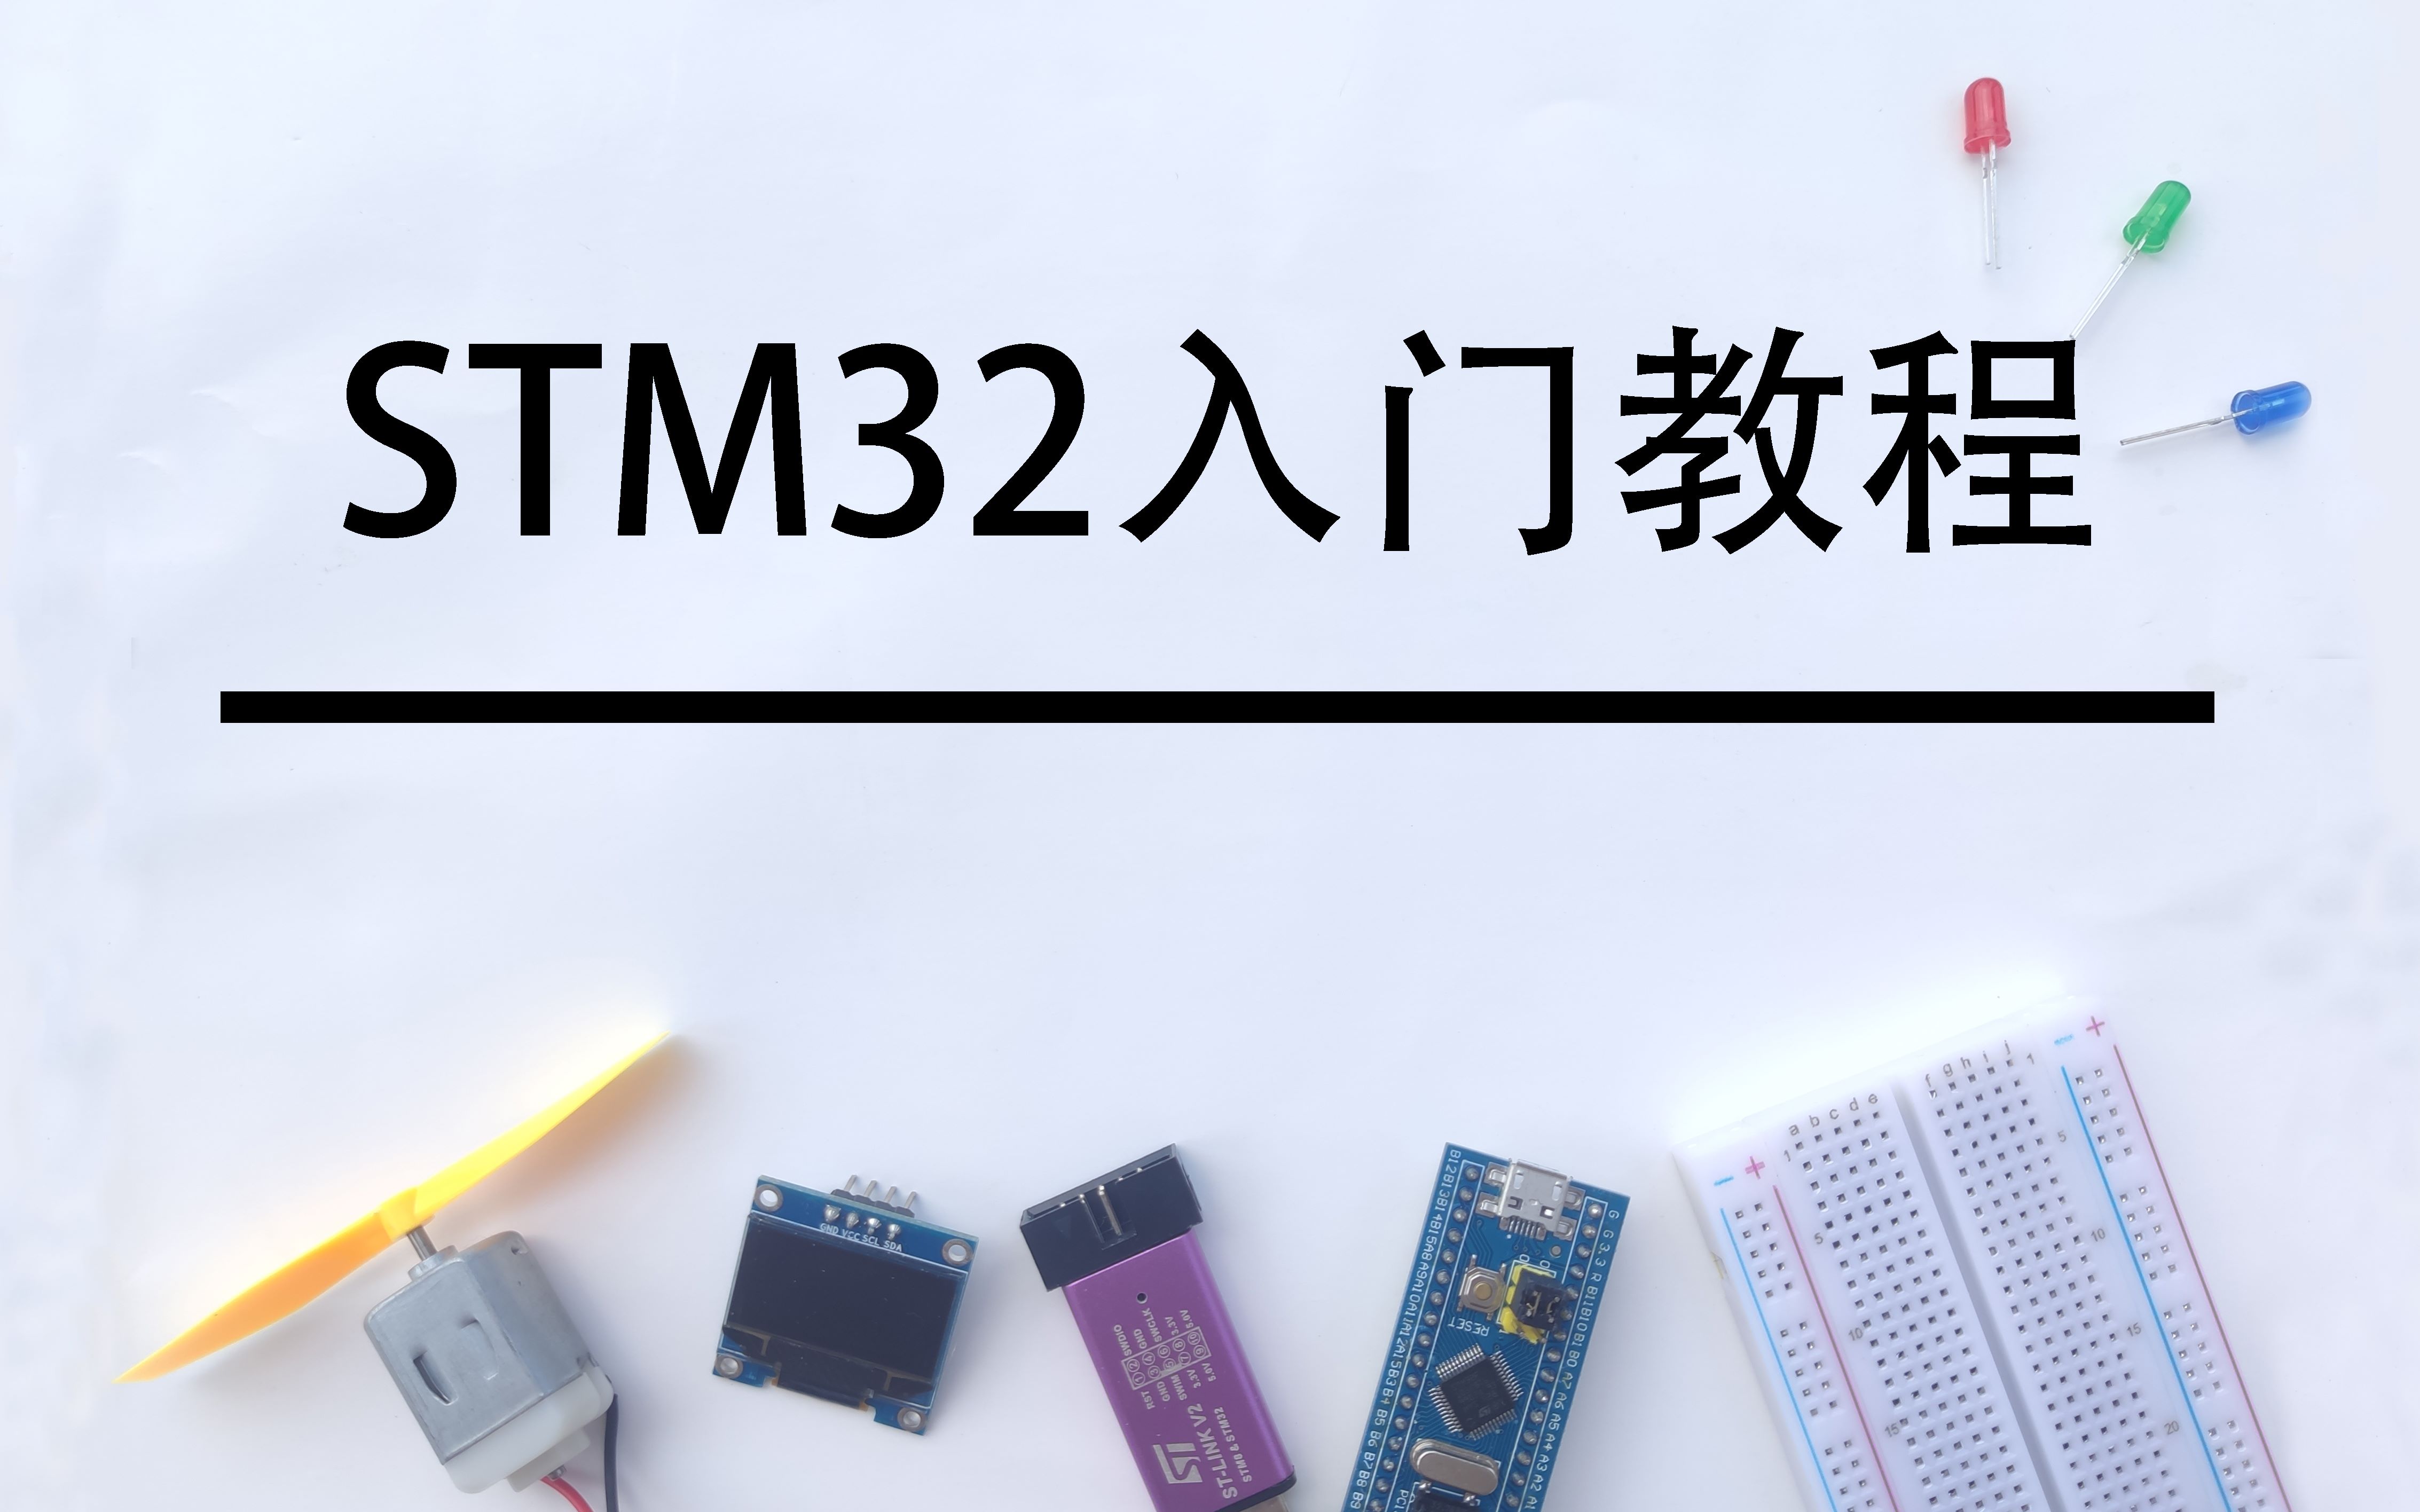 STM32入门教程-2023版 细致讲解 中文字幕